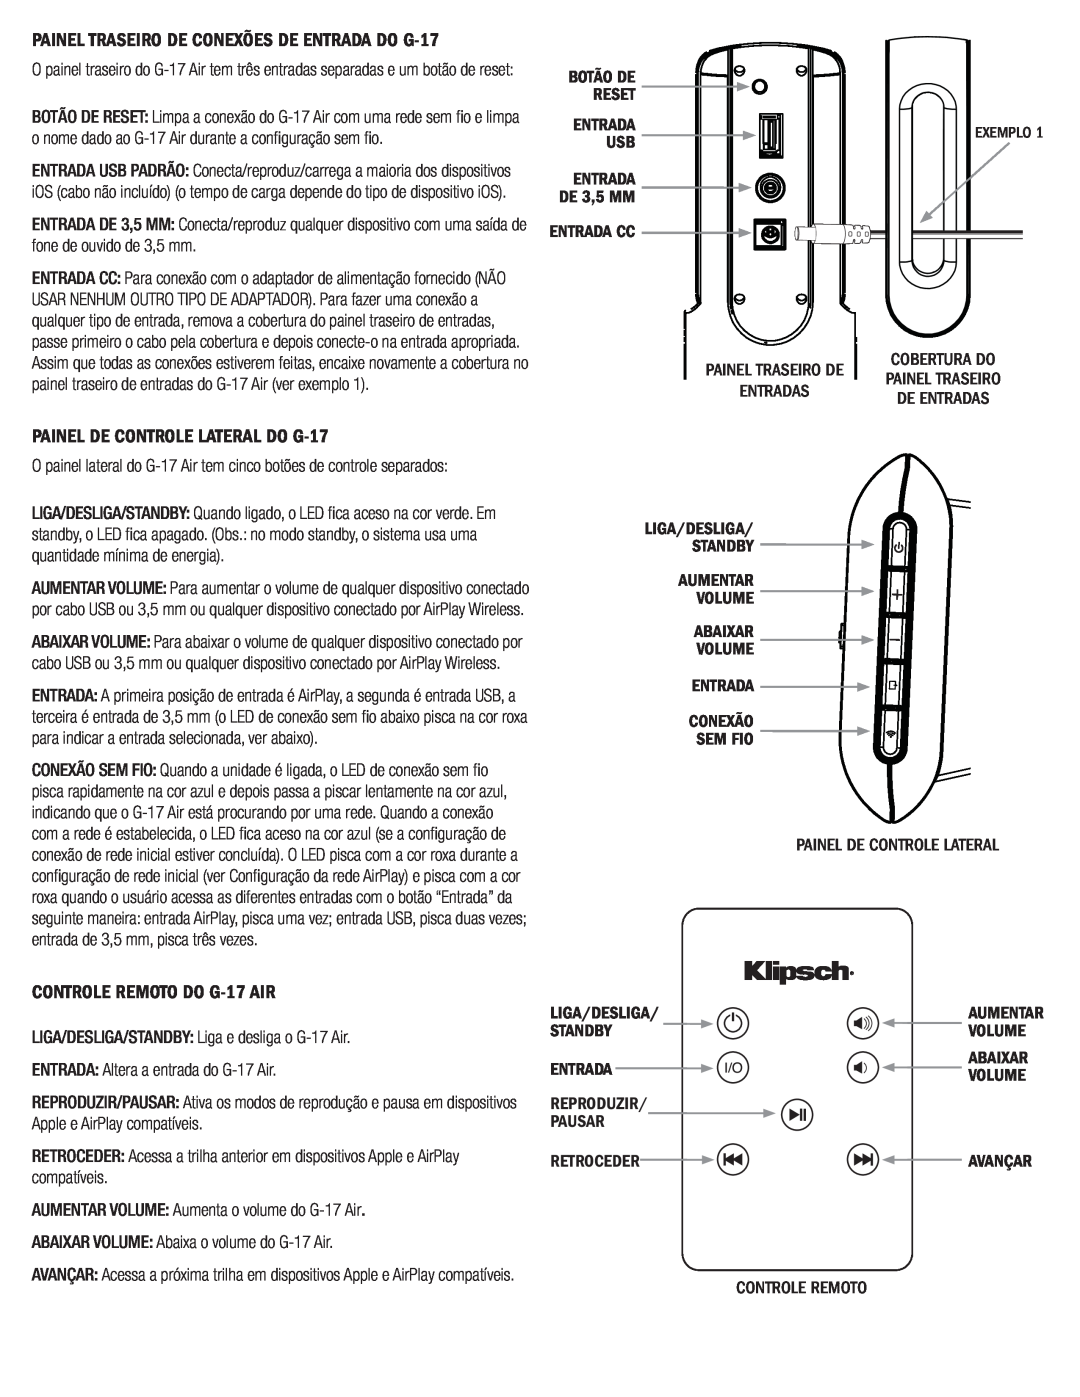 Klipsch G-17 AIR owner manual PAINEL DE CONTROLE LATERAL DO G-17, CONTROLE REMOTO DO G-17AIR 